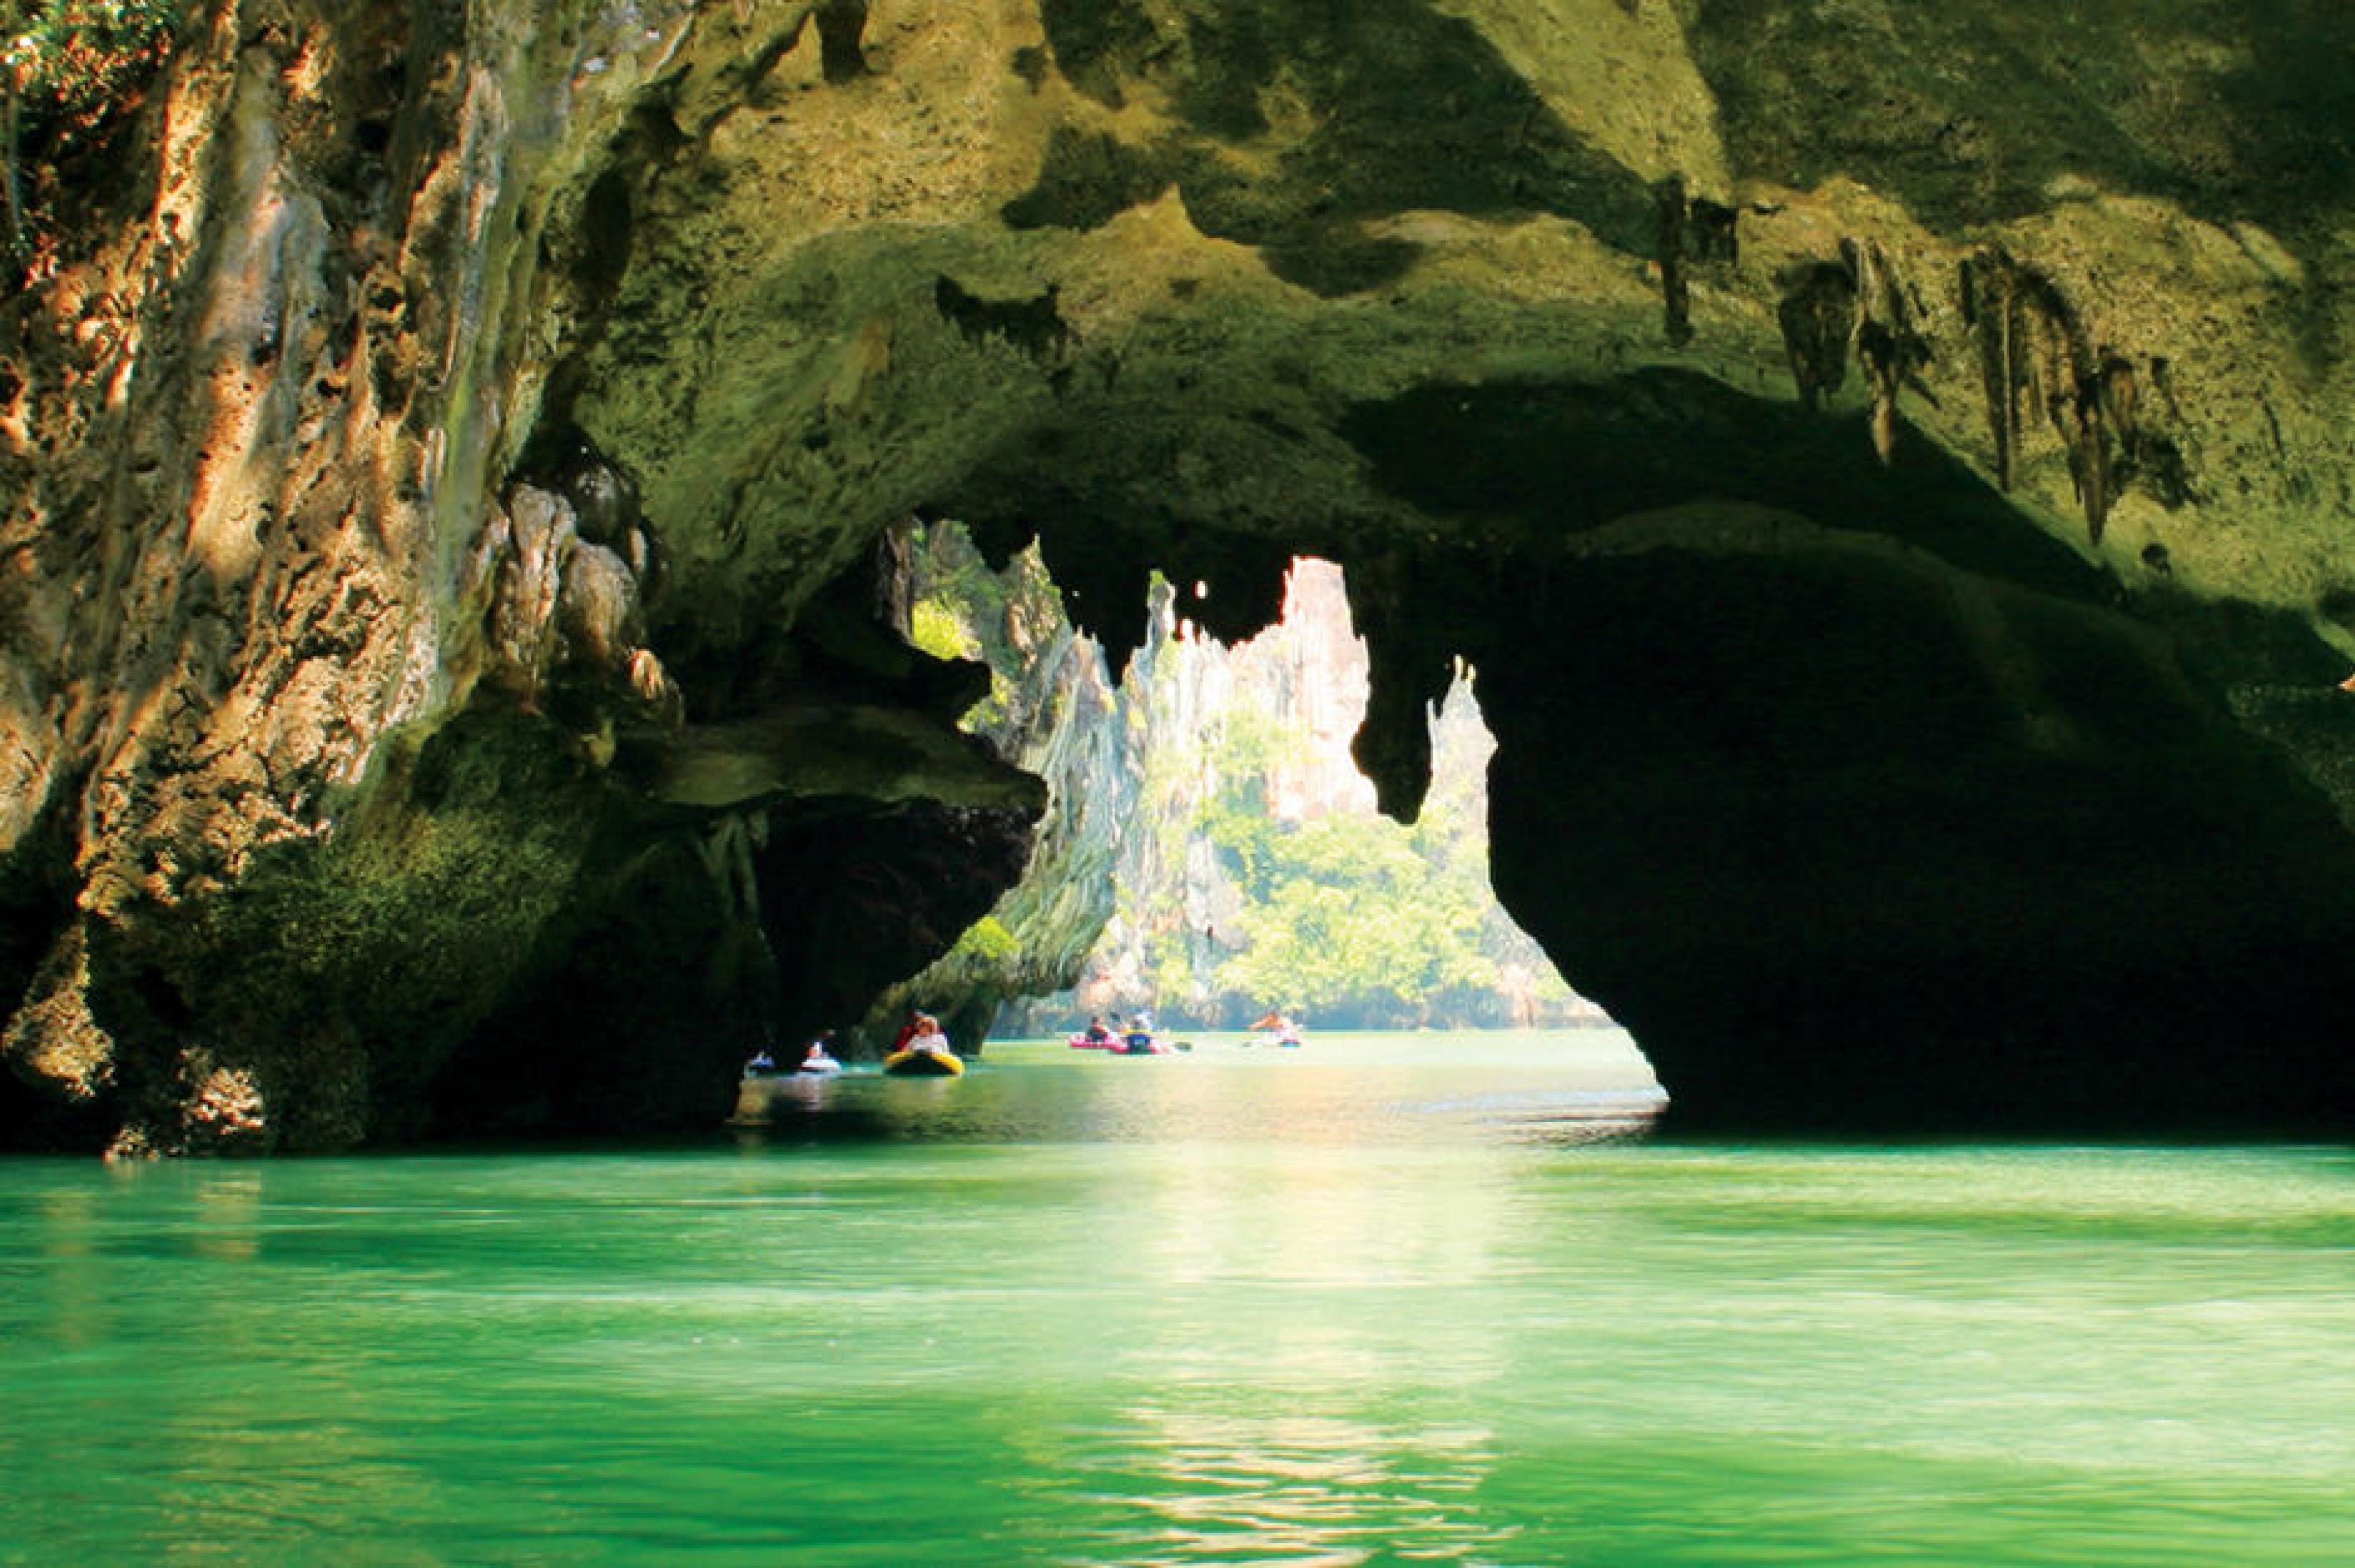 Aerial View - Indagare Tours: Sea Cave Kayaking,Phuket, Thailand - Courtesy Trisara